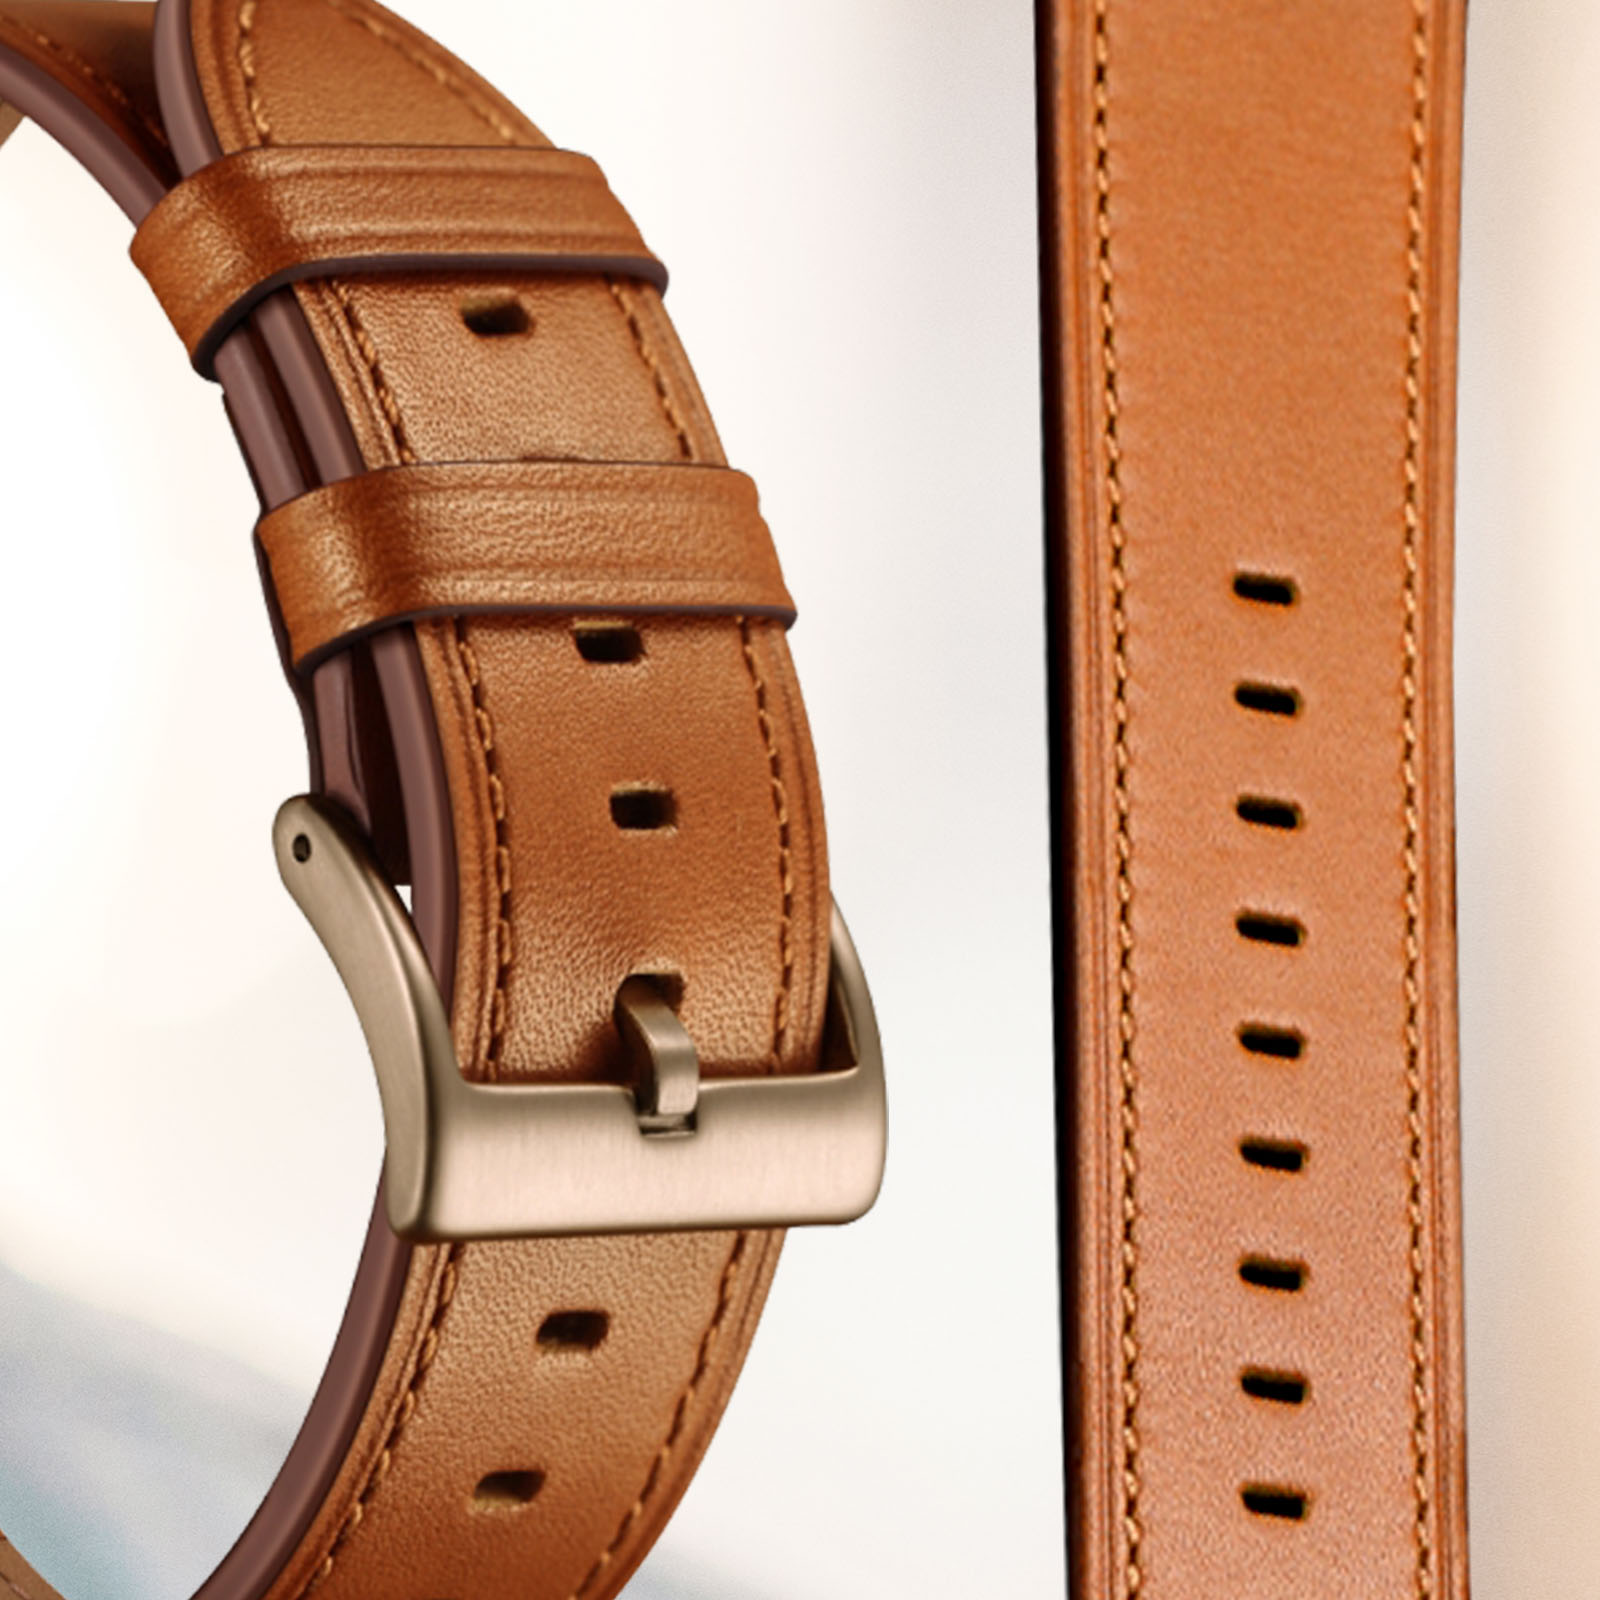 Bracelet Apple Watch croco cuir 100% véritable 42mm marron